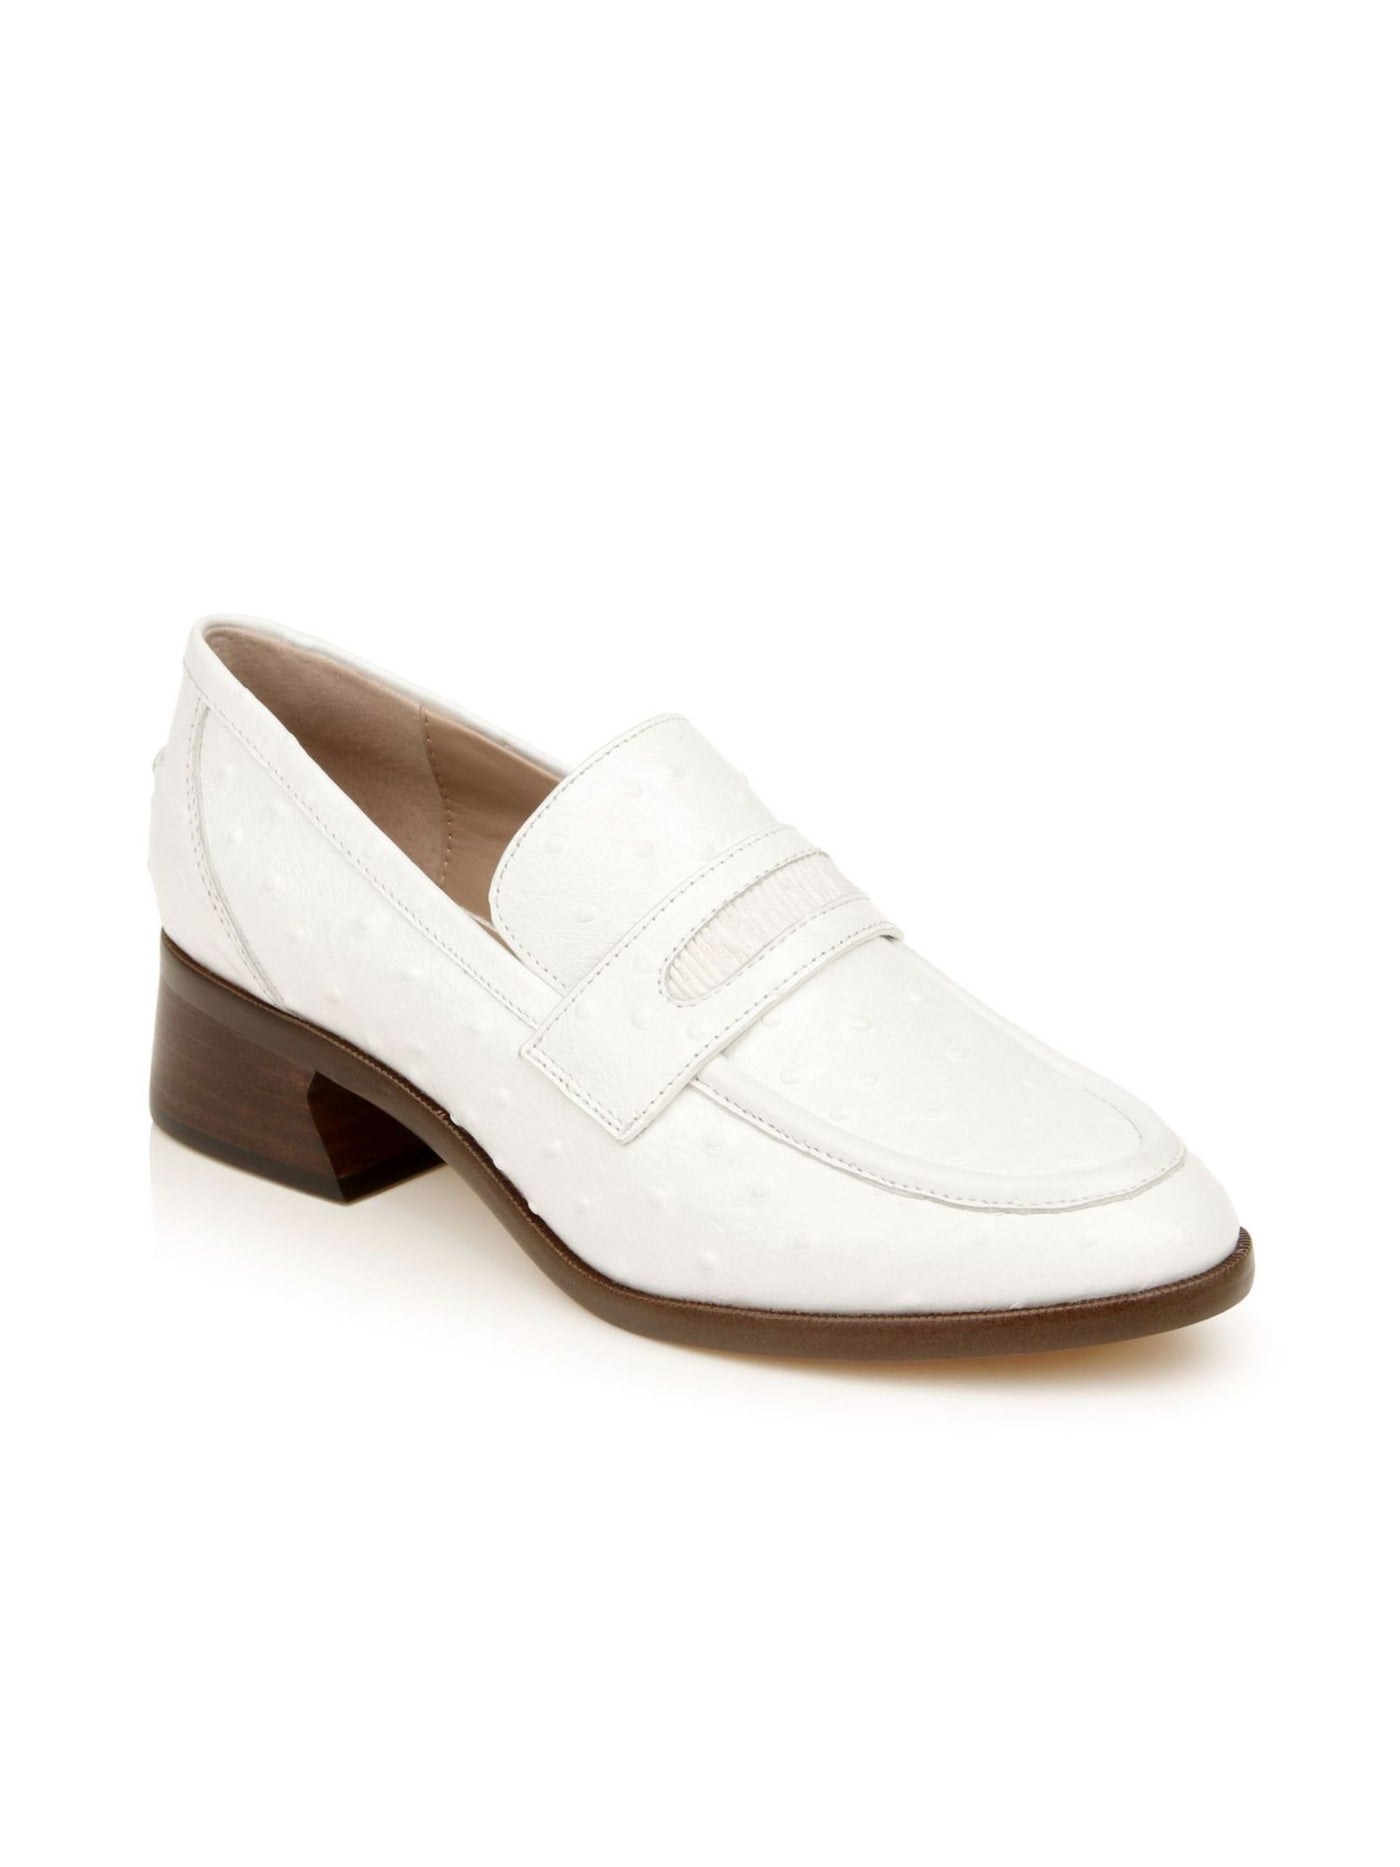 ZAC ZAC POSEN Womens White Polka Dot Cushioned Comfort Wayne Almond Toe Block Heel Slip On Leather Heeled Loafers 7.5 M